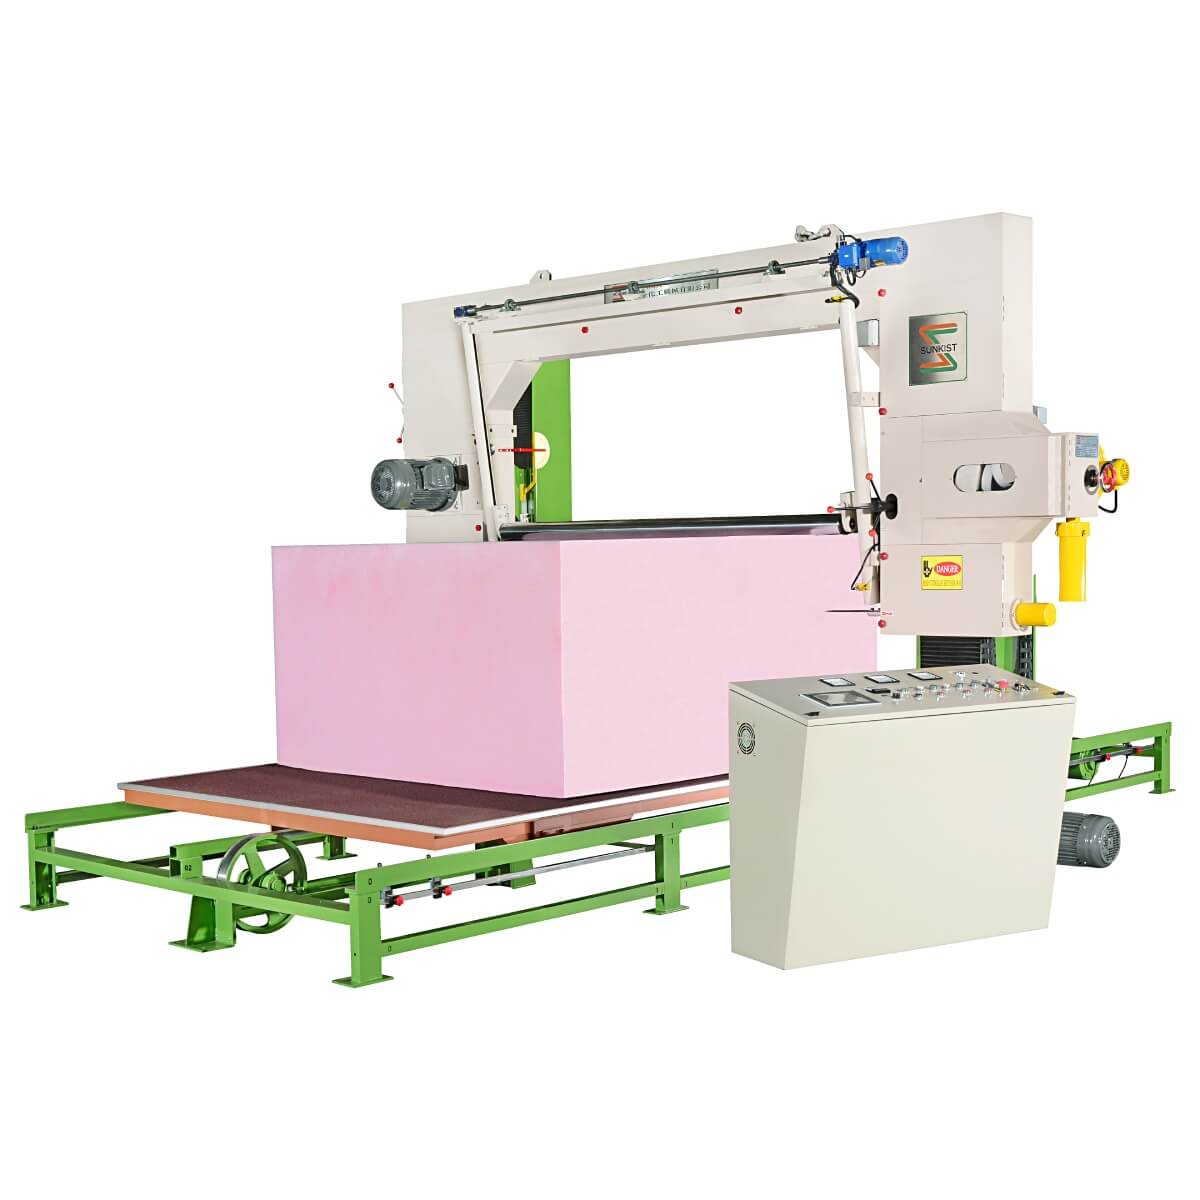 BSL-200 - Horizontal foam cutting machine